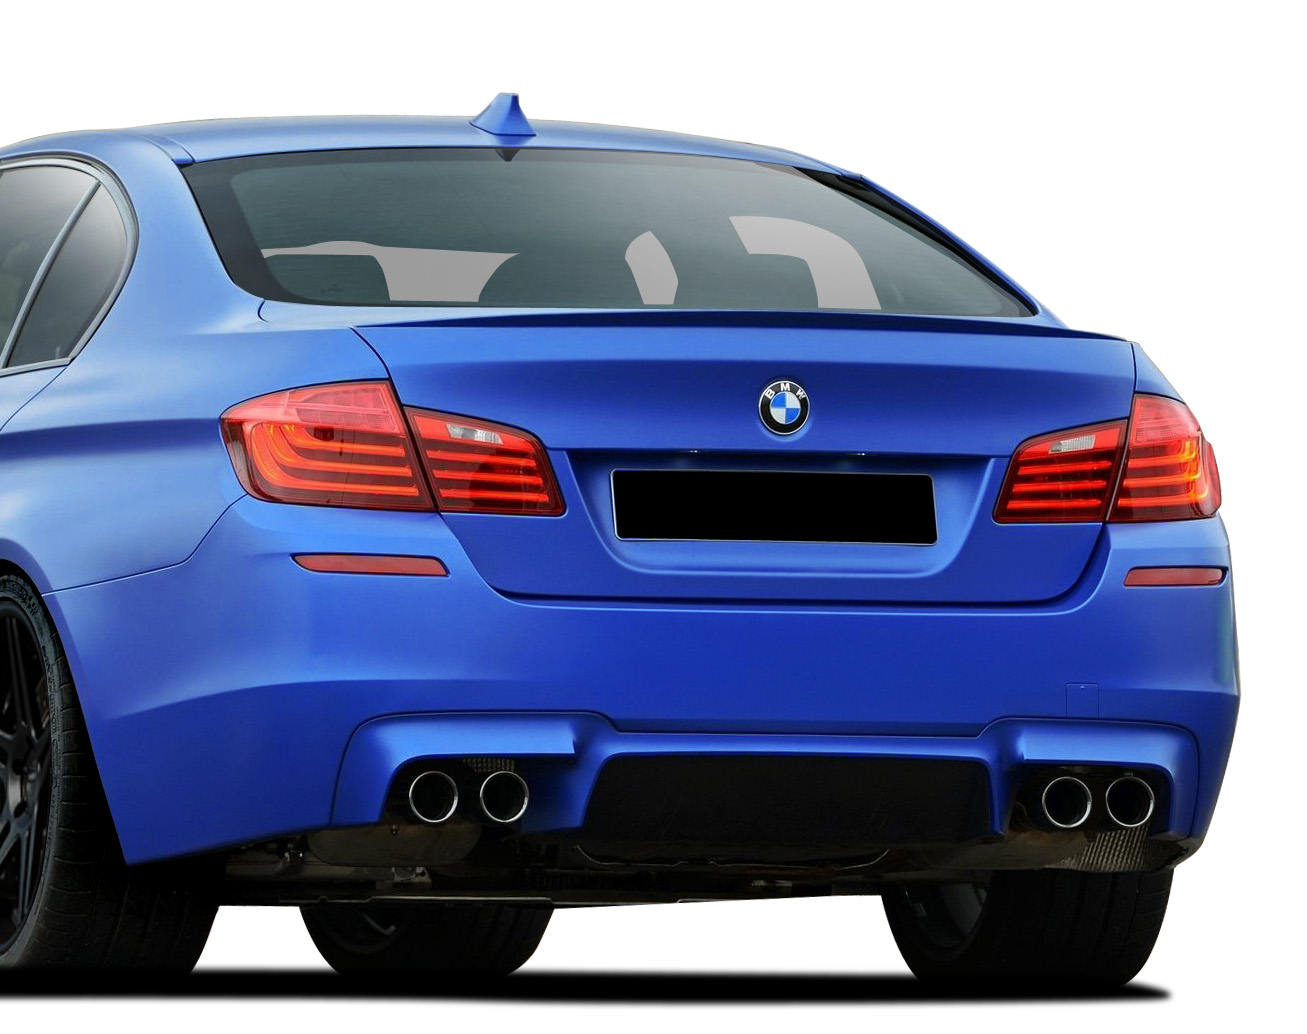 2016 BMW 5 Series 4DR - Polypropylene Rear Bumper Bodykit - BMW 5 Series F10 4DR Vaero M5 Look Rear Bumper Cover ( without PDC ) - 1 Piece